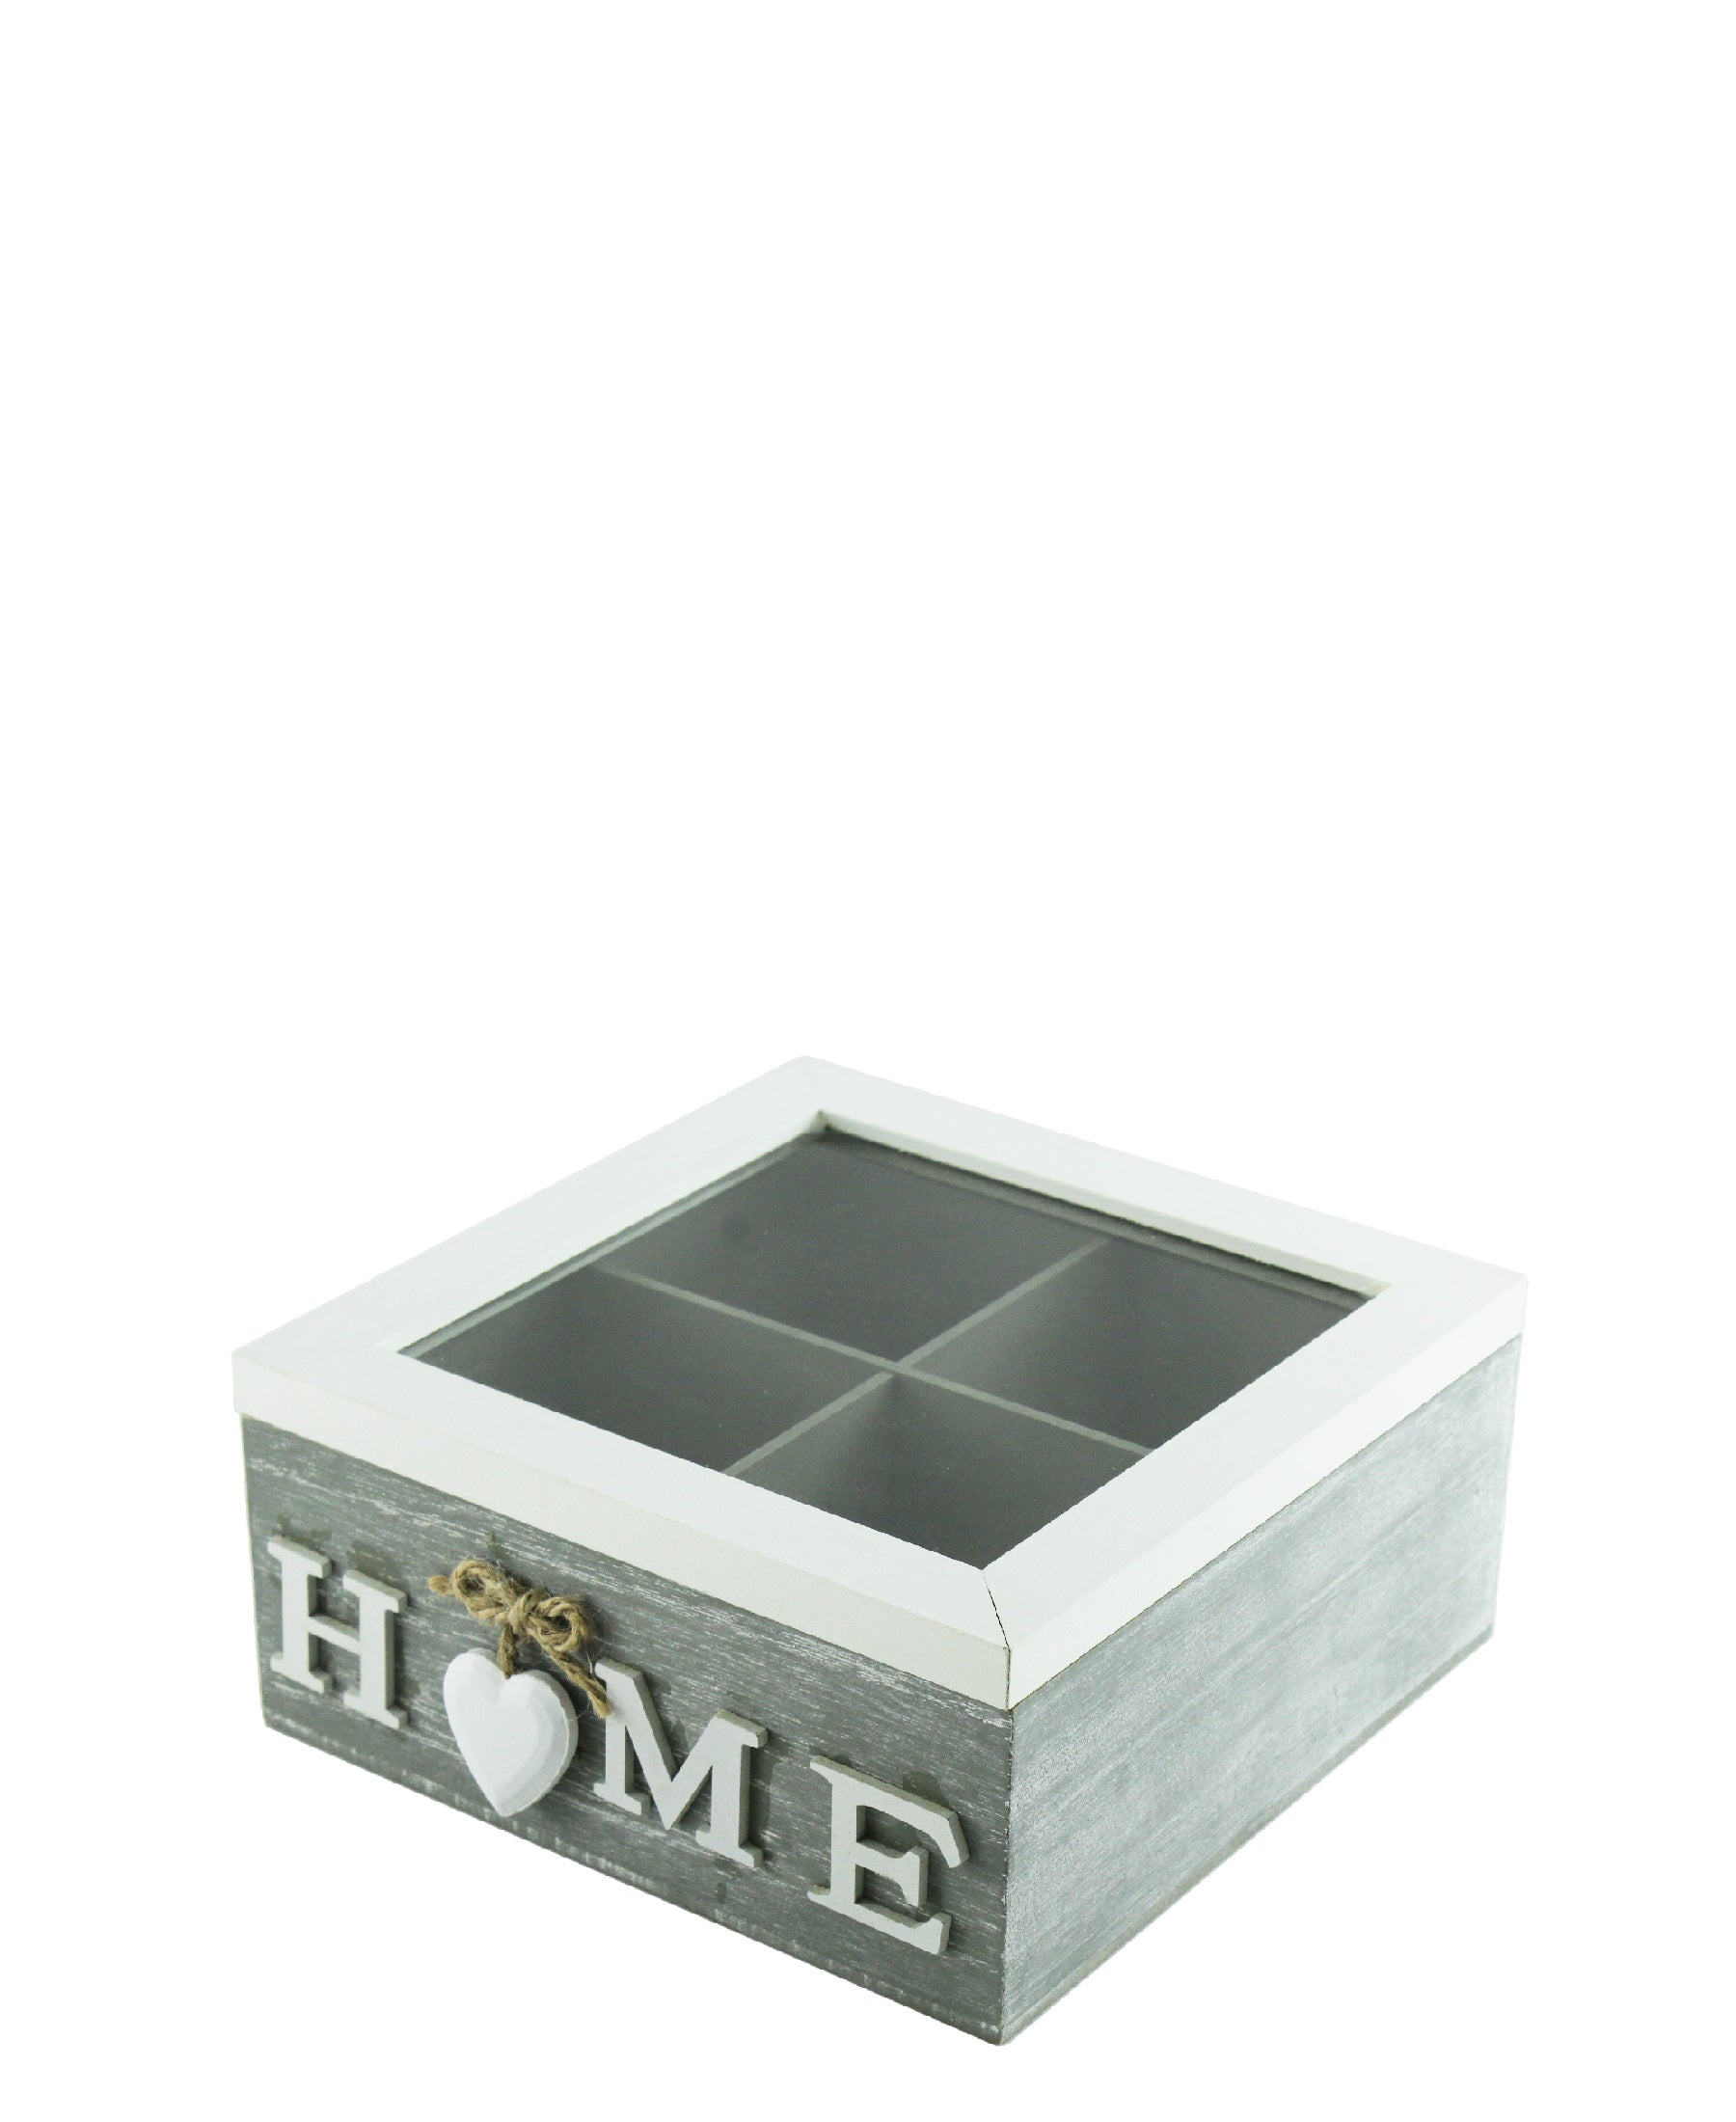 Kitchen Life Home Tea Box Small - Grey